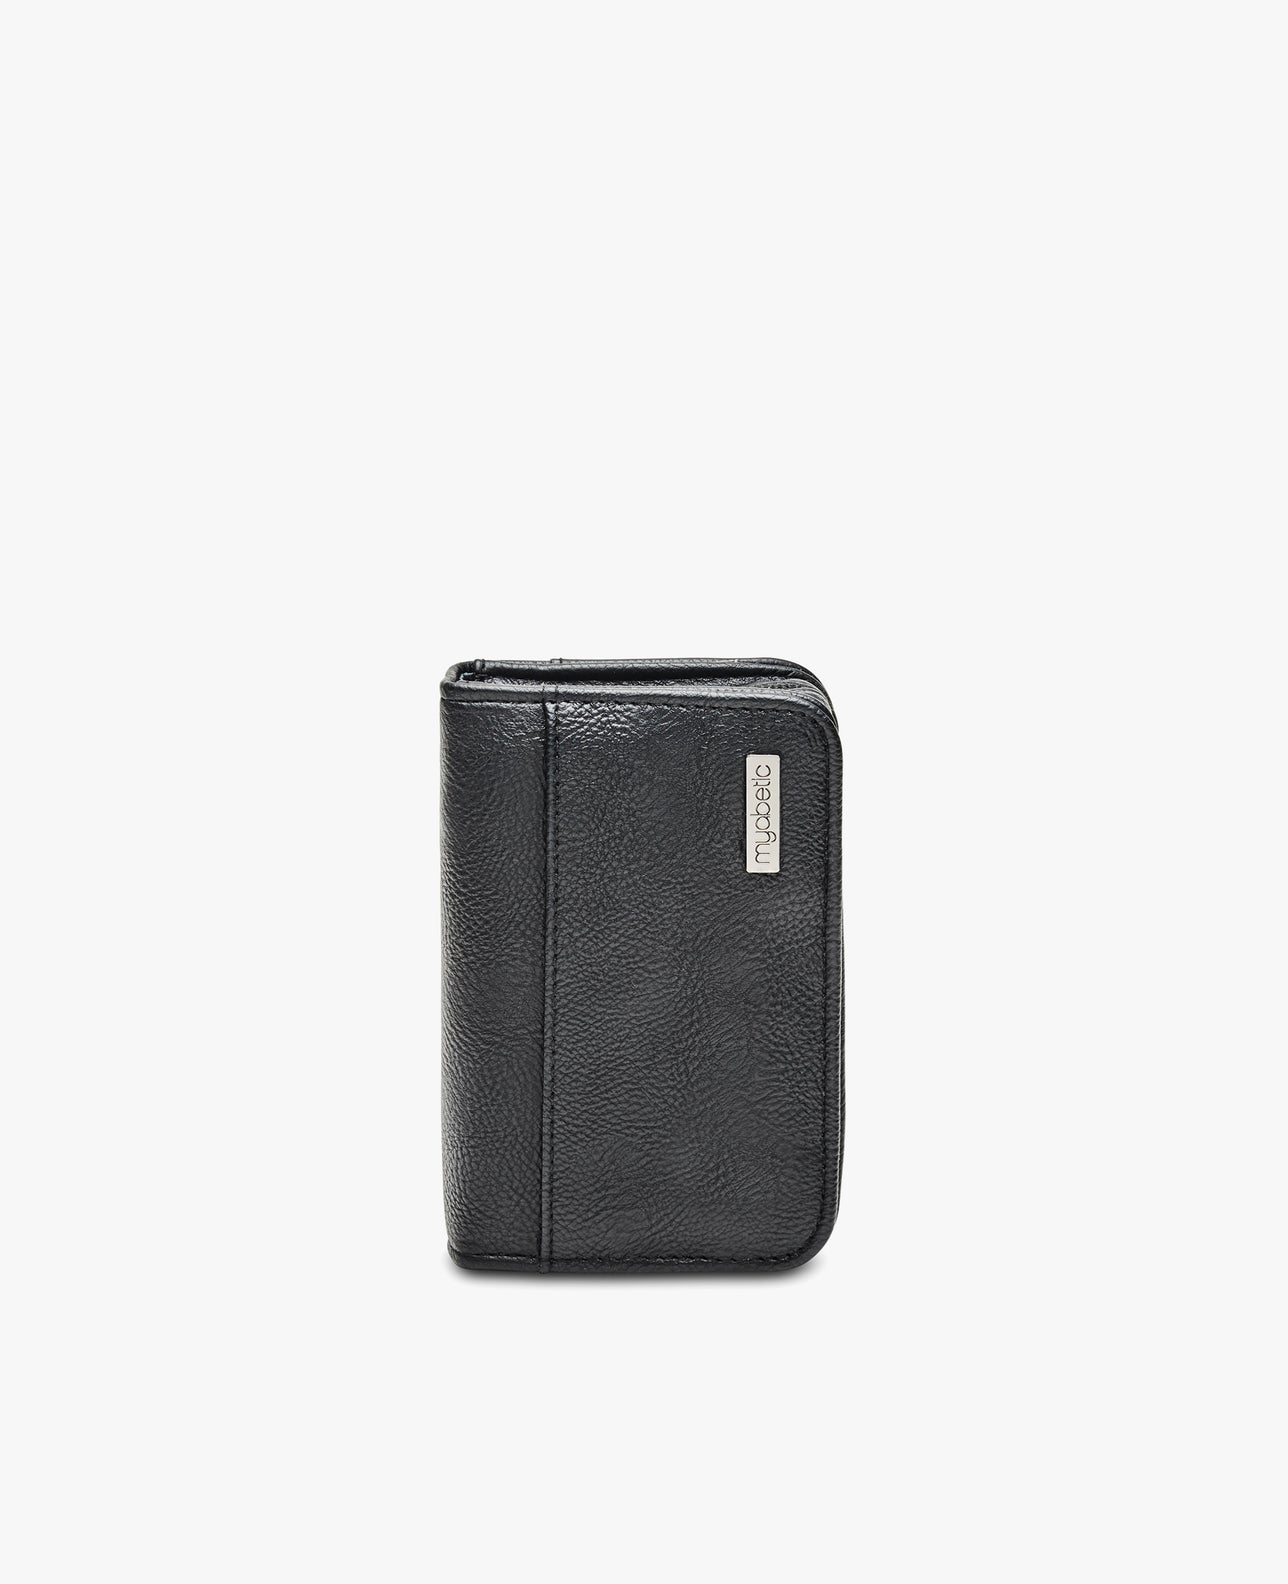 BOSS by HUGO BOSS Signature Leather Zipped Card Holder in Black for Men